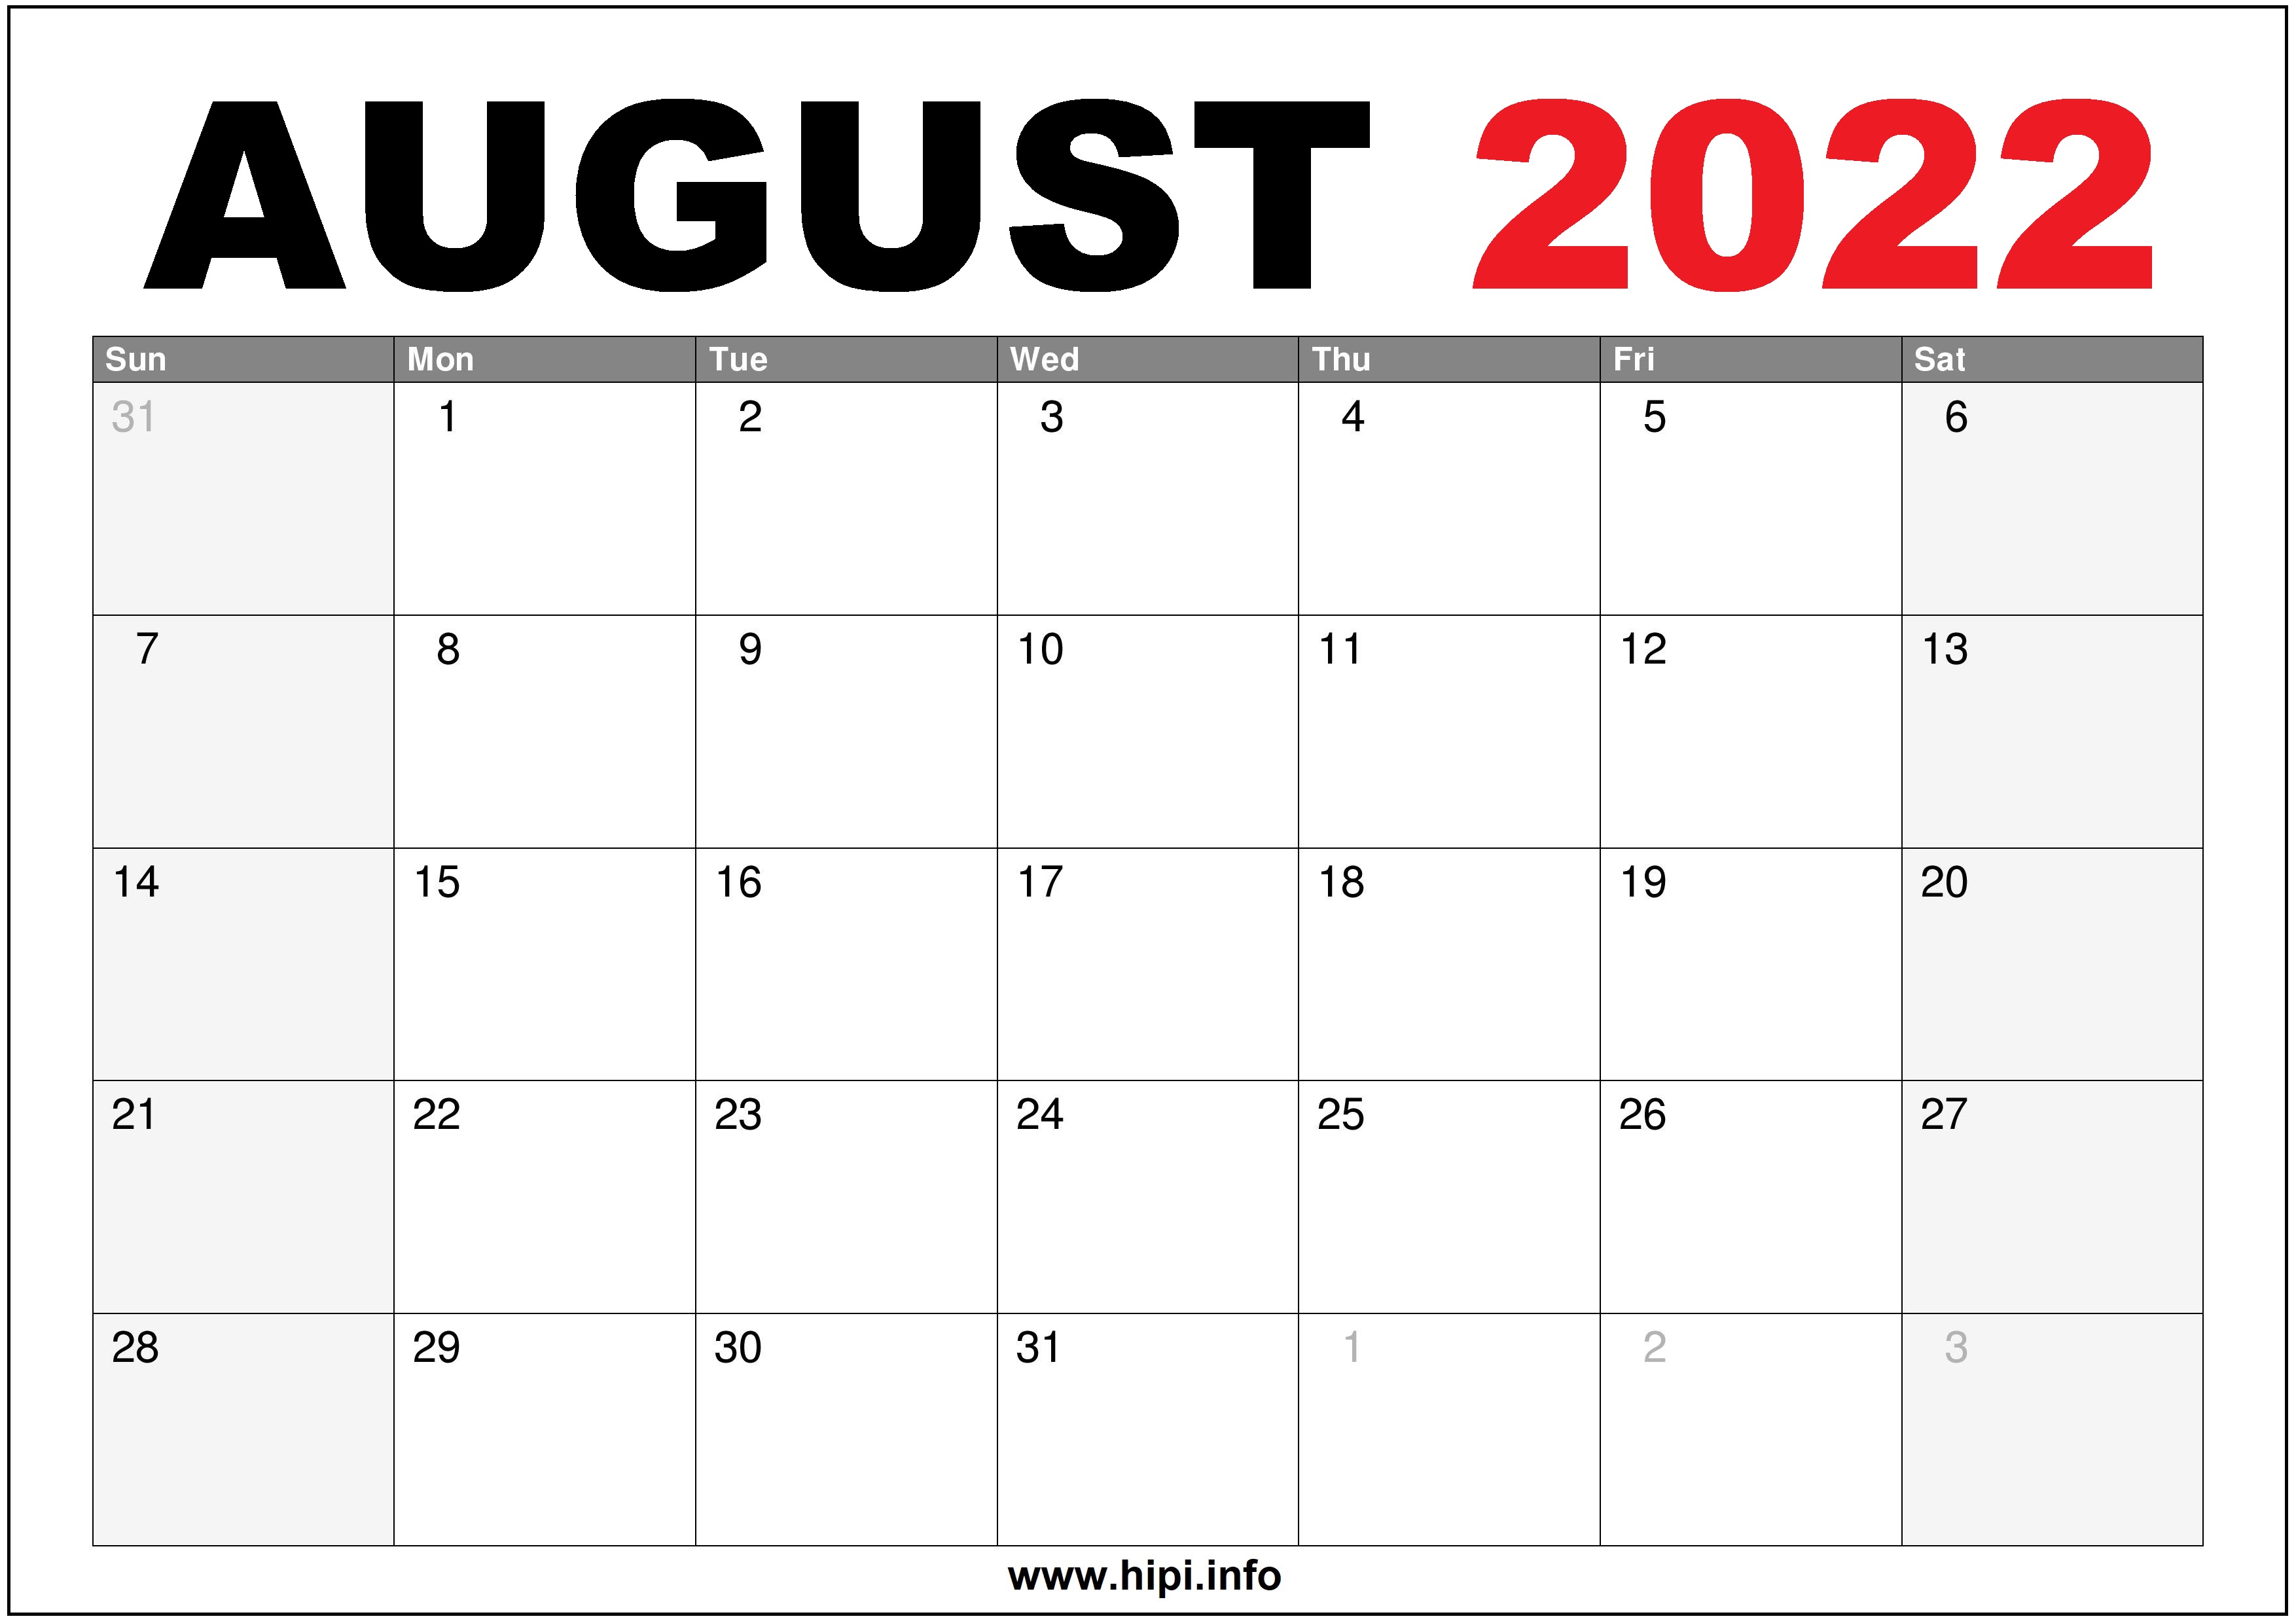 Month Of August 2022 Calendar Us August 2022 Calendar Printable - Hipi.info | Calendars Printable Free